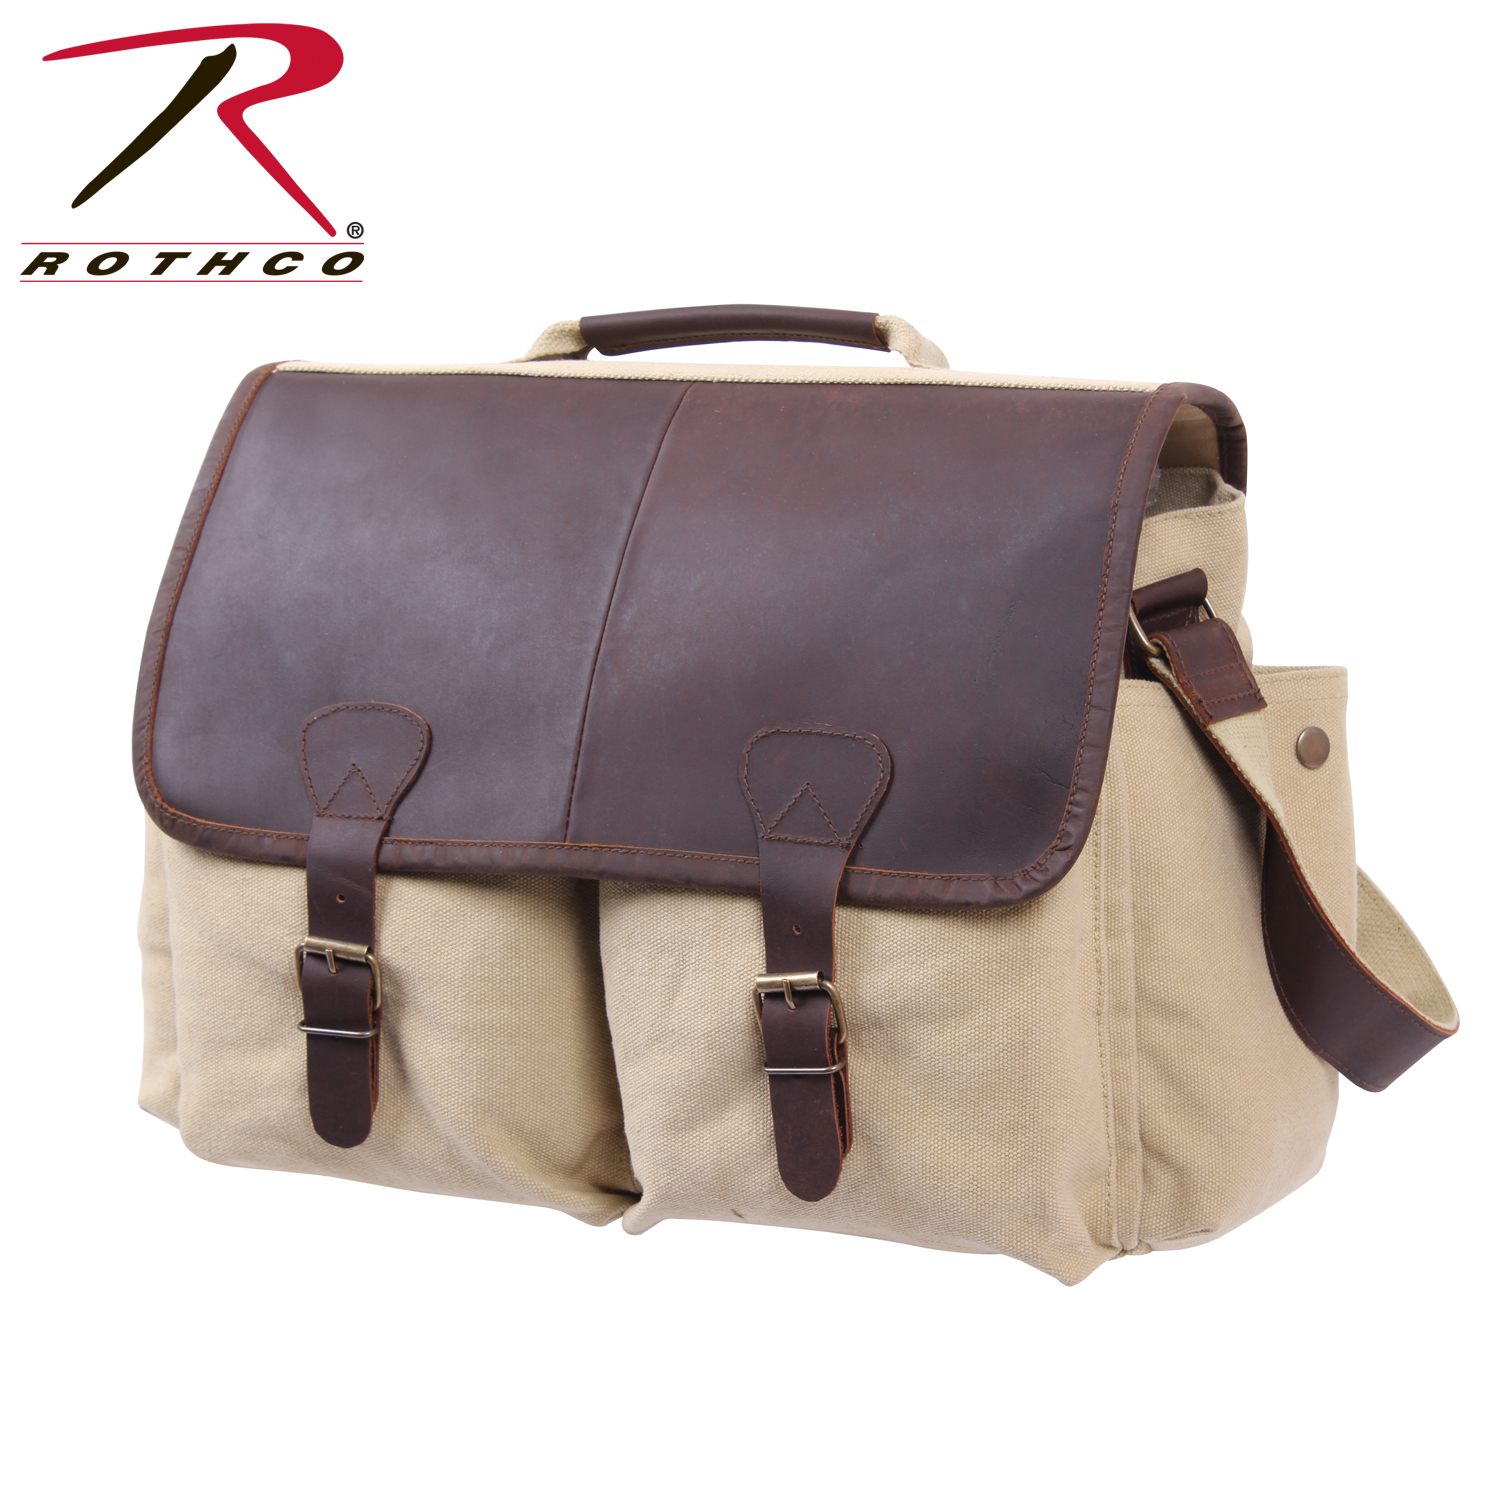 Rothco Vintage Leather Flap Messenger Bag